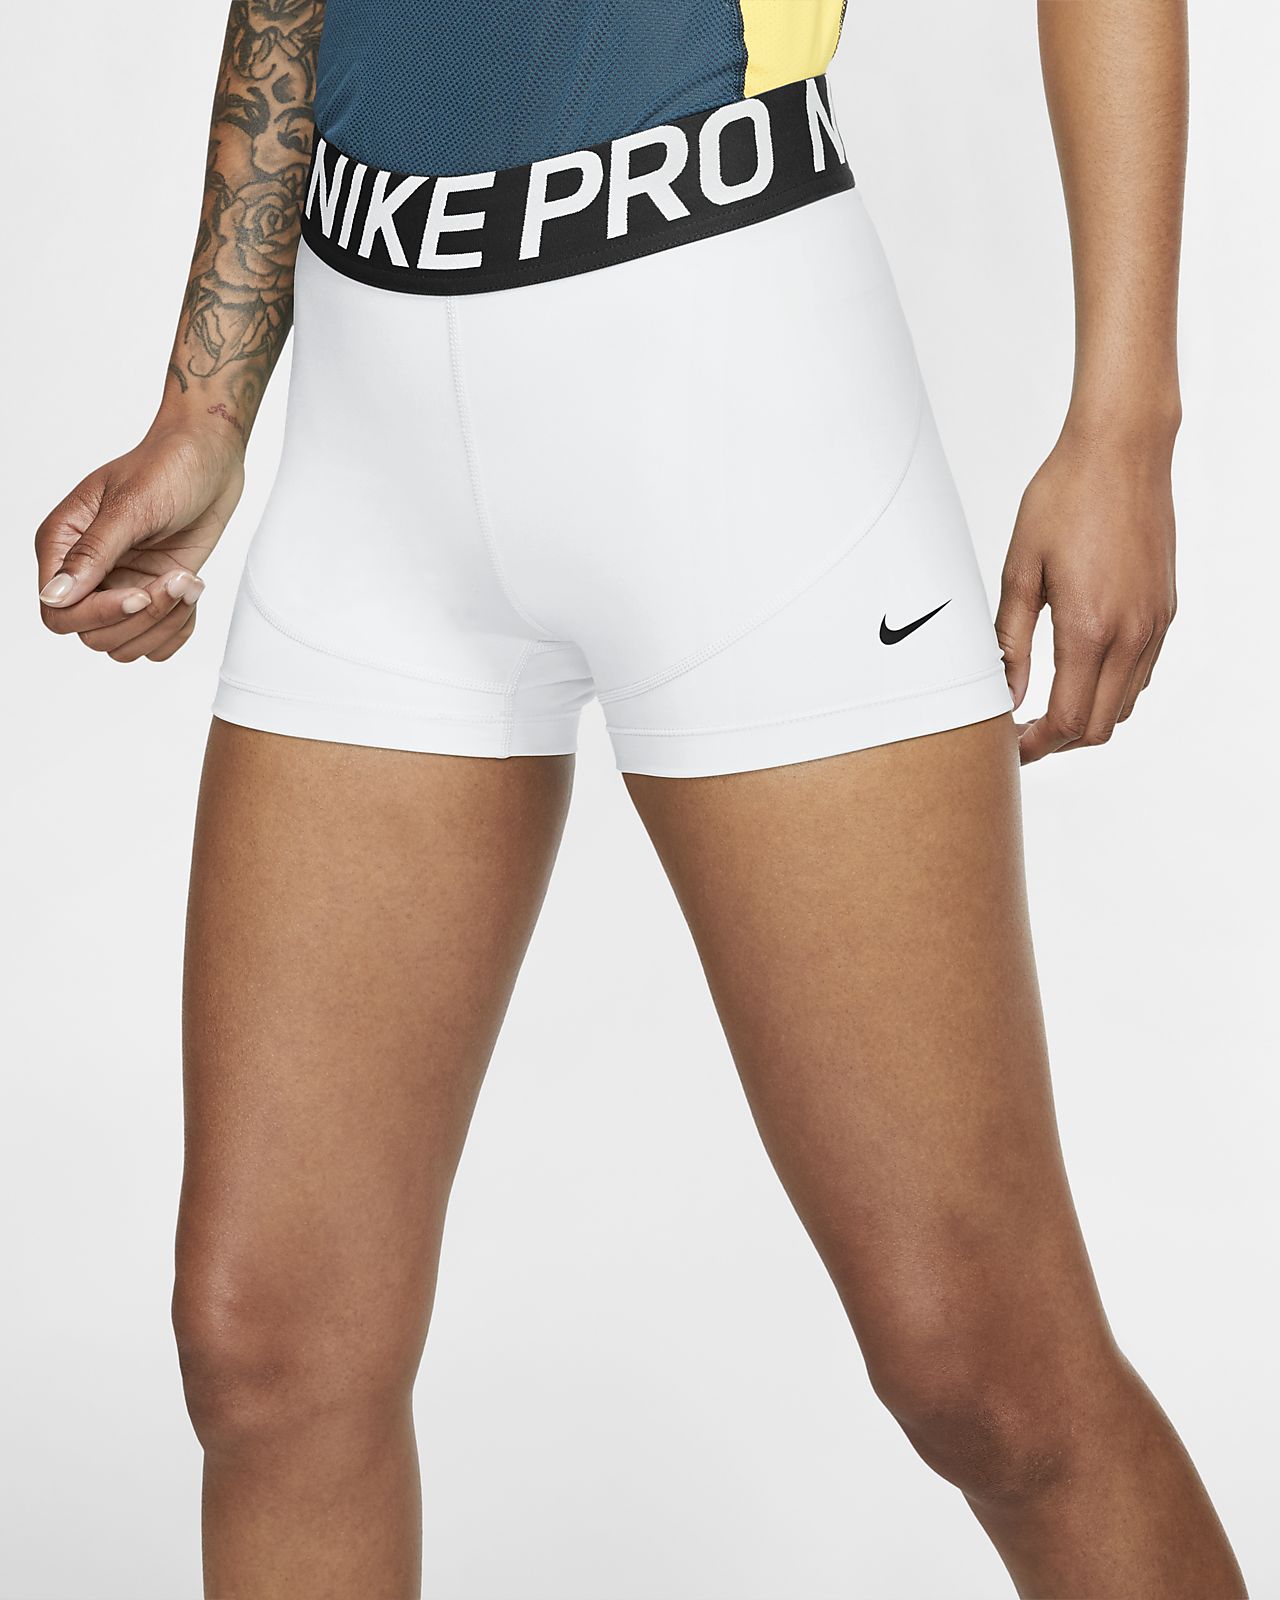 white nike pros shorts